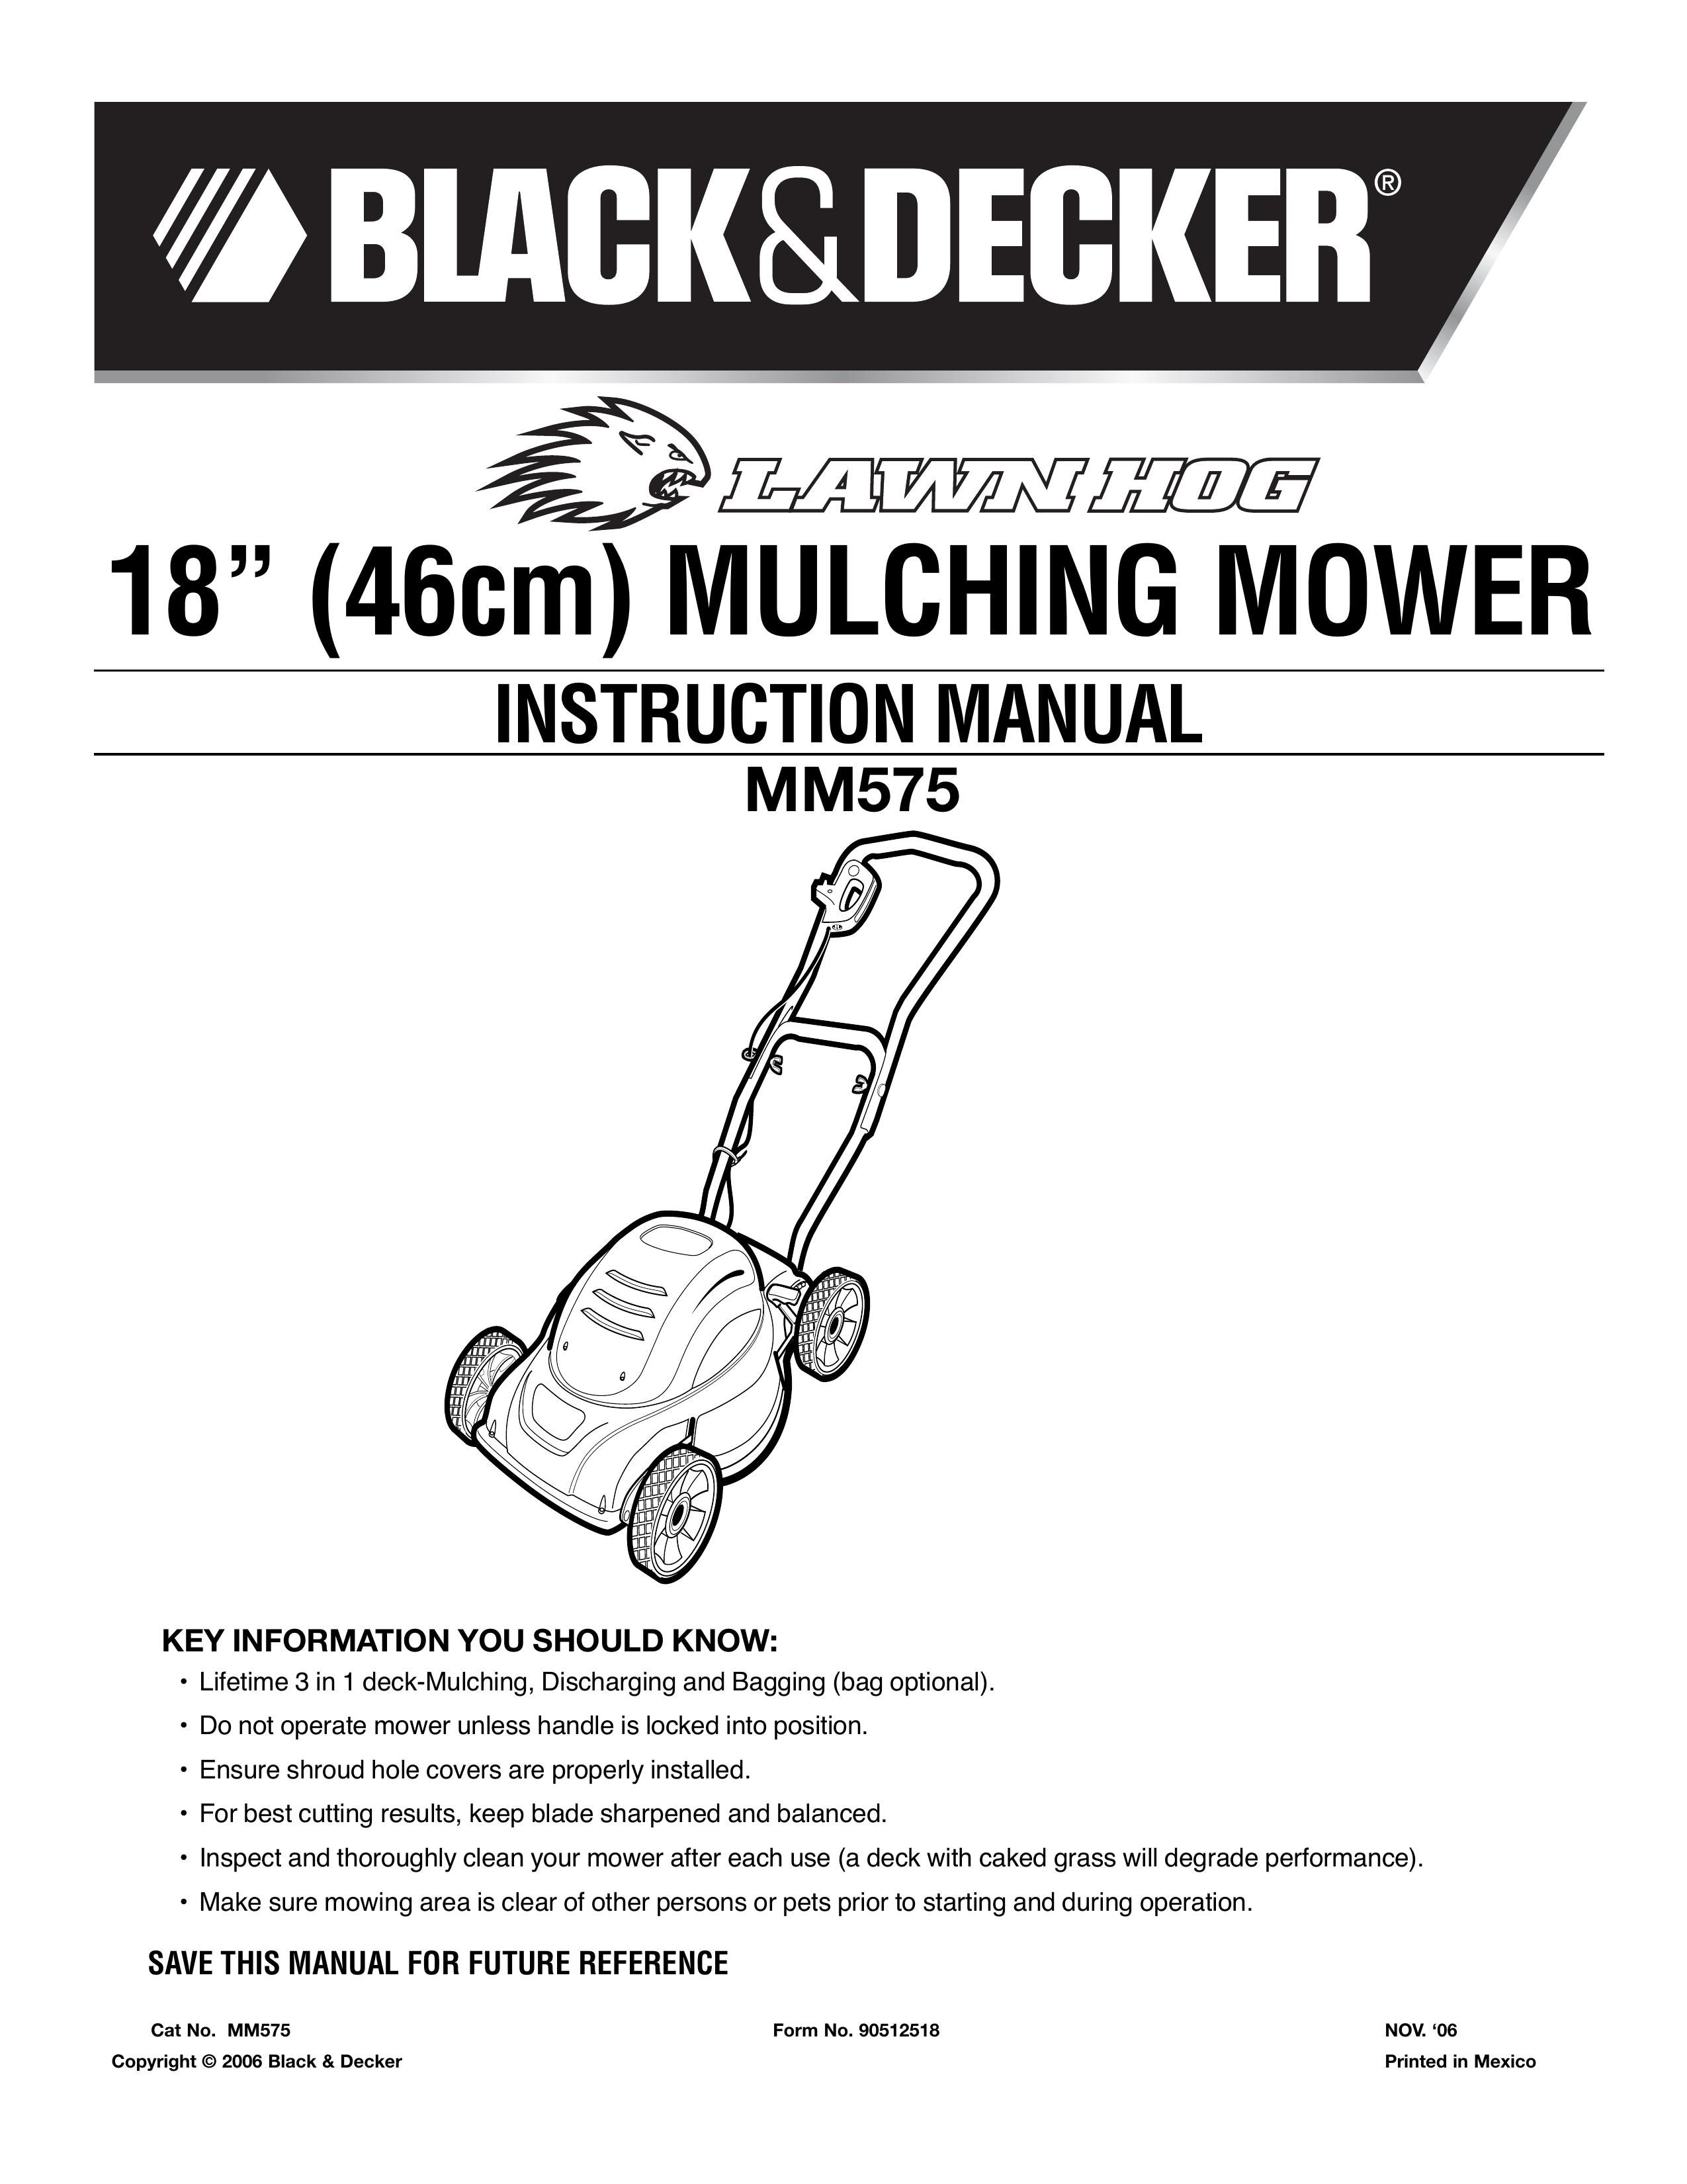 Black & Decker MM575 Lawn Mower User Manual